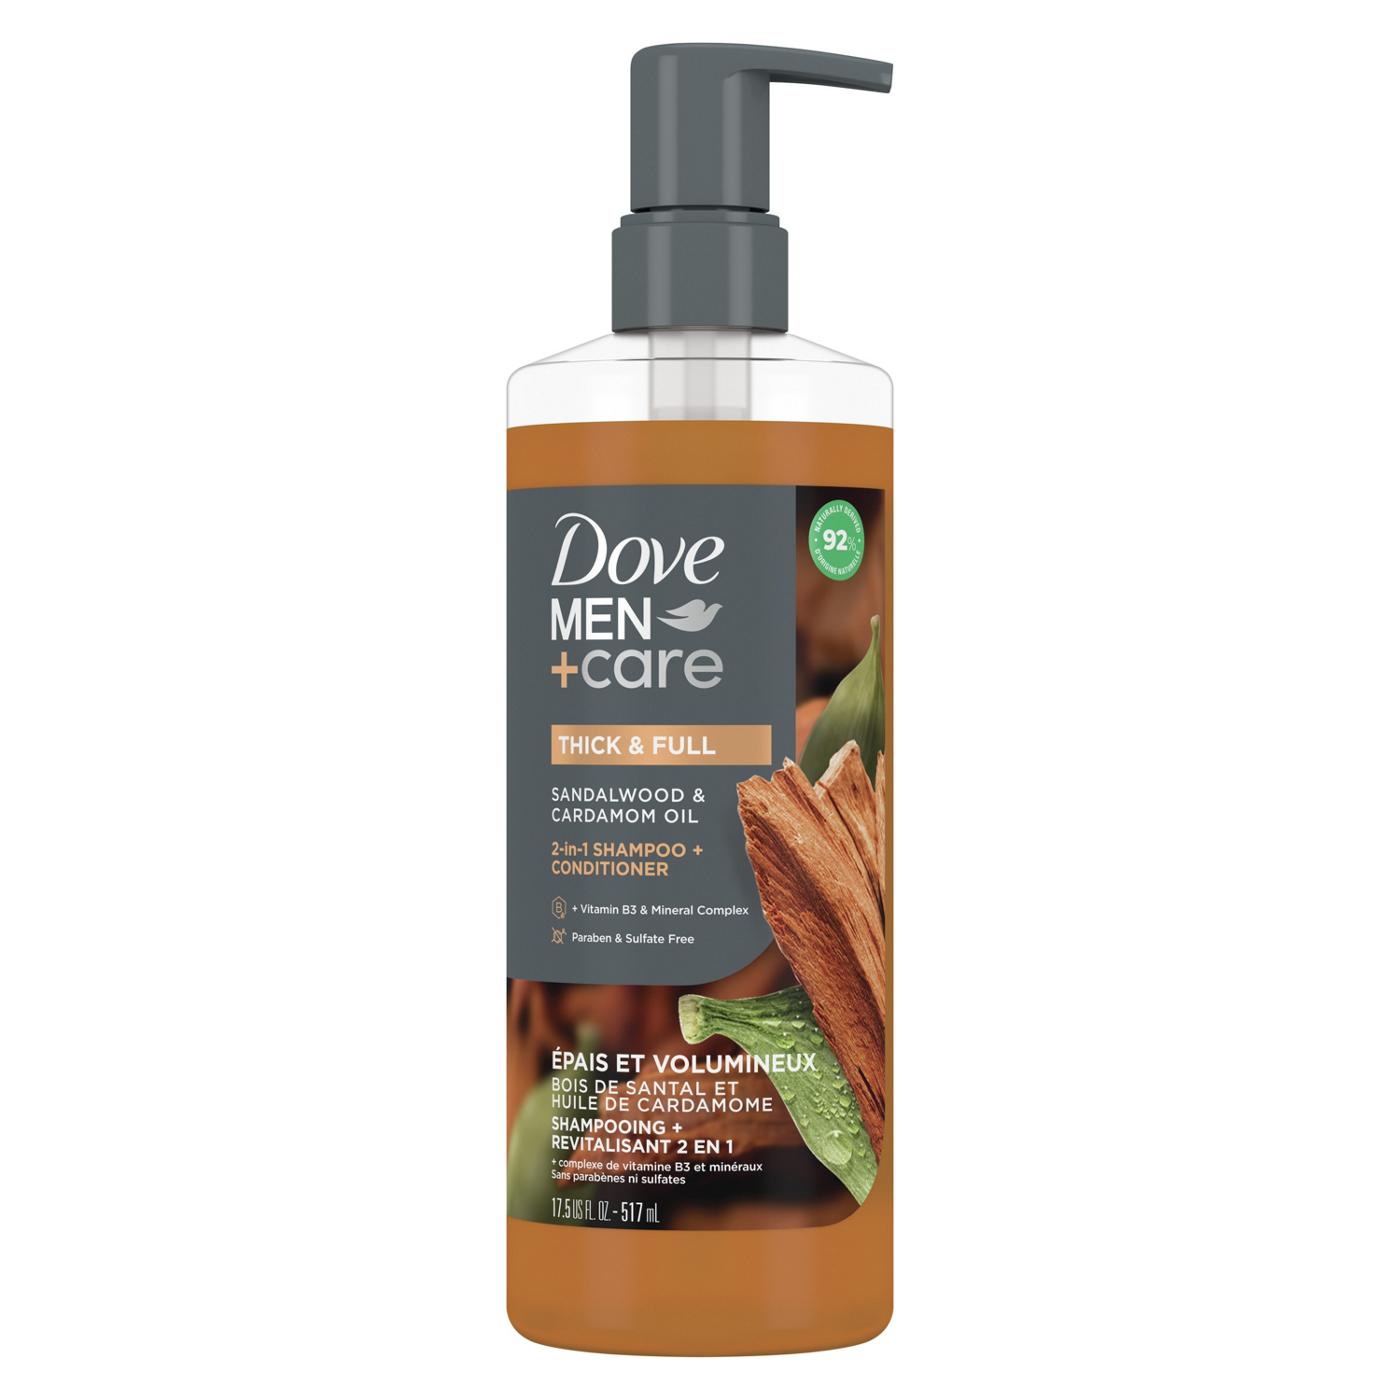 Dove Men+Care Thick & Full 2 in 1 Shampoo + Conditioner - Sandalwood & Cardamom Oil; image 1 of 5